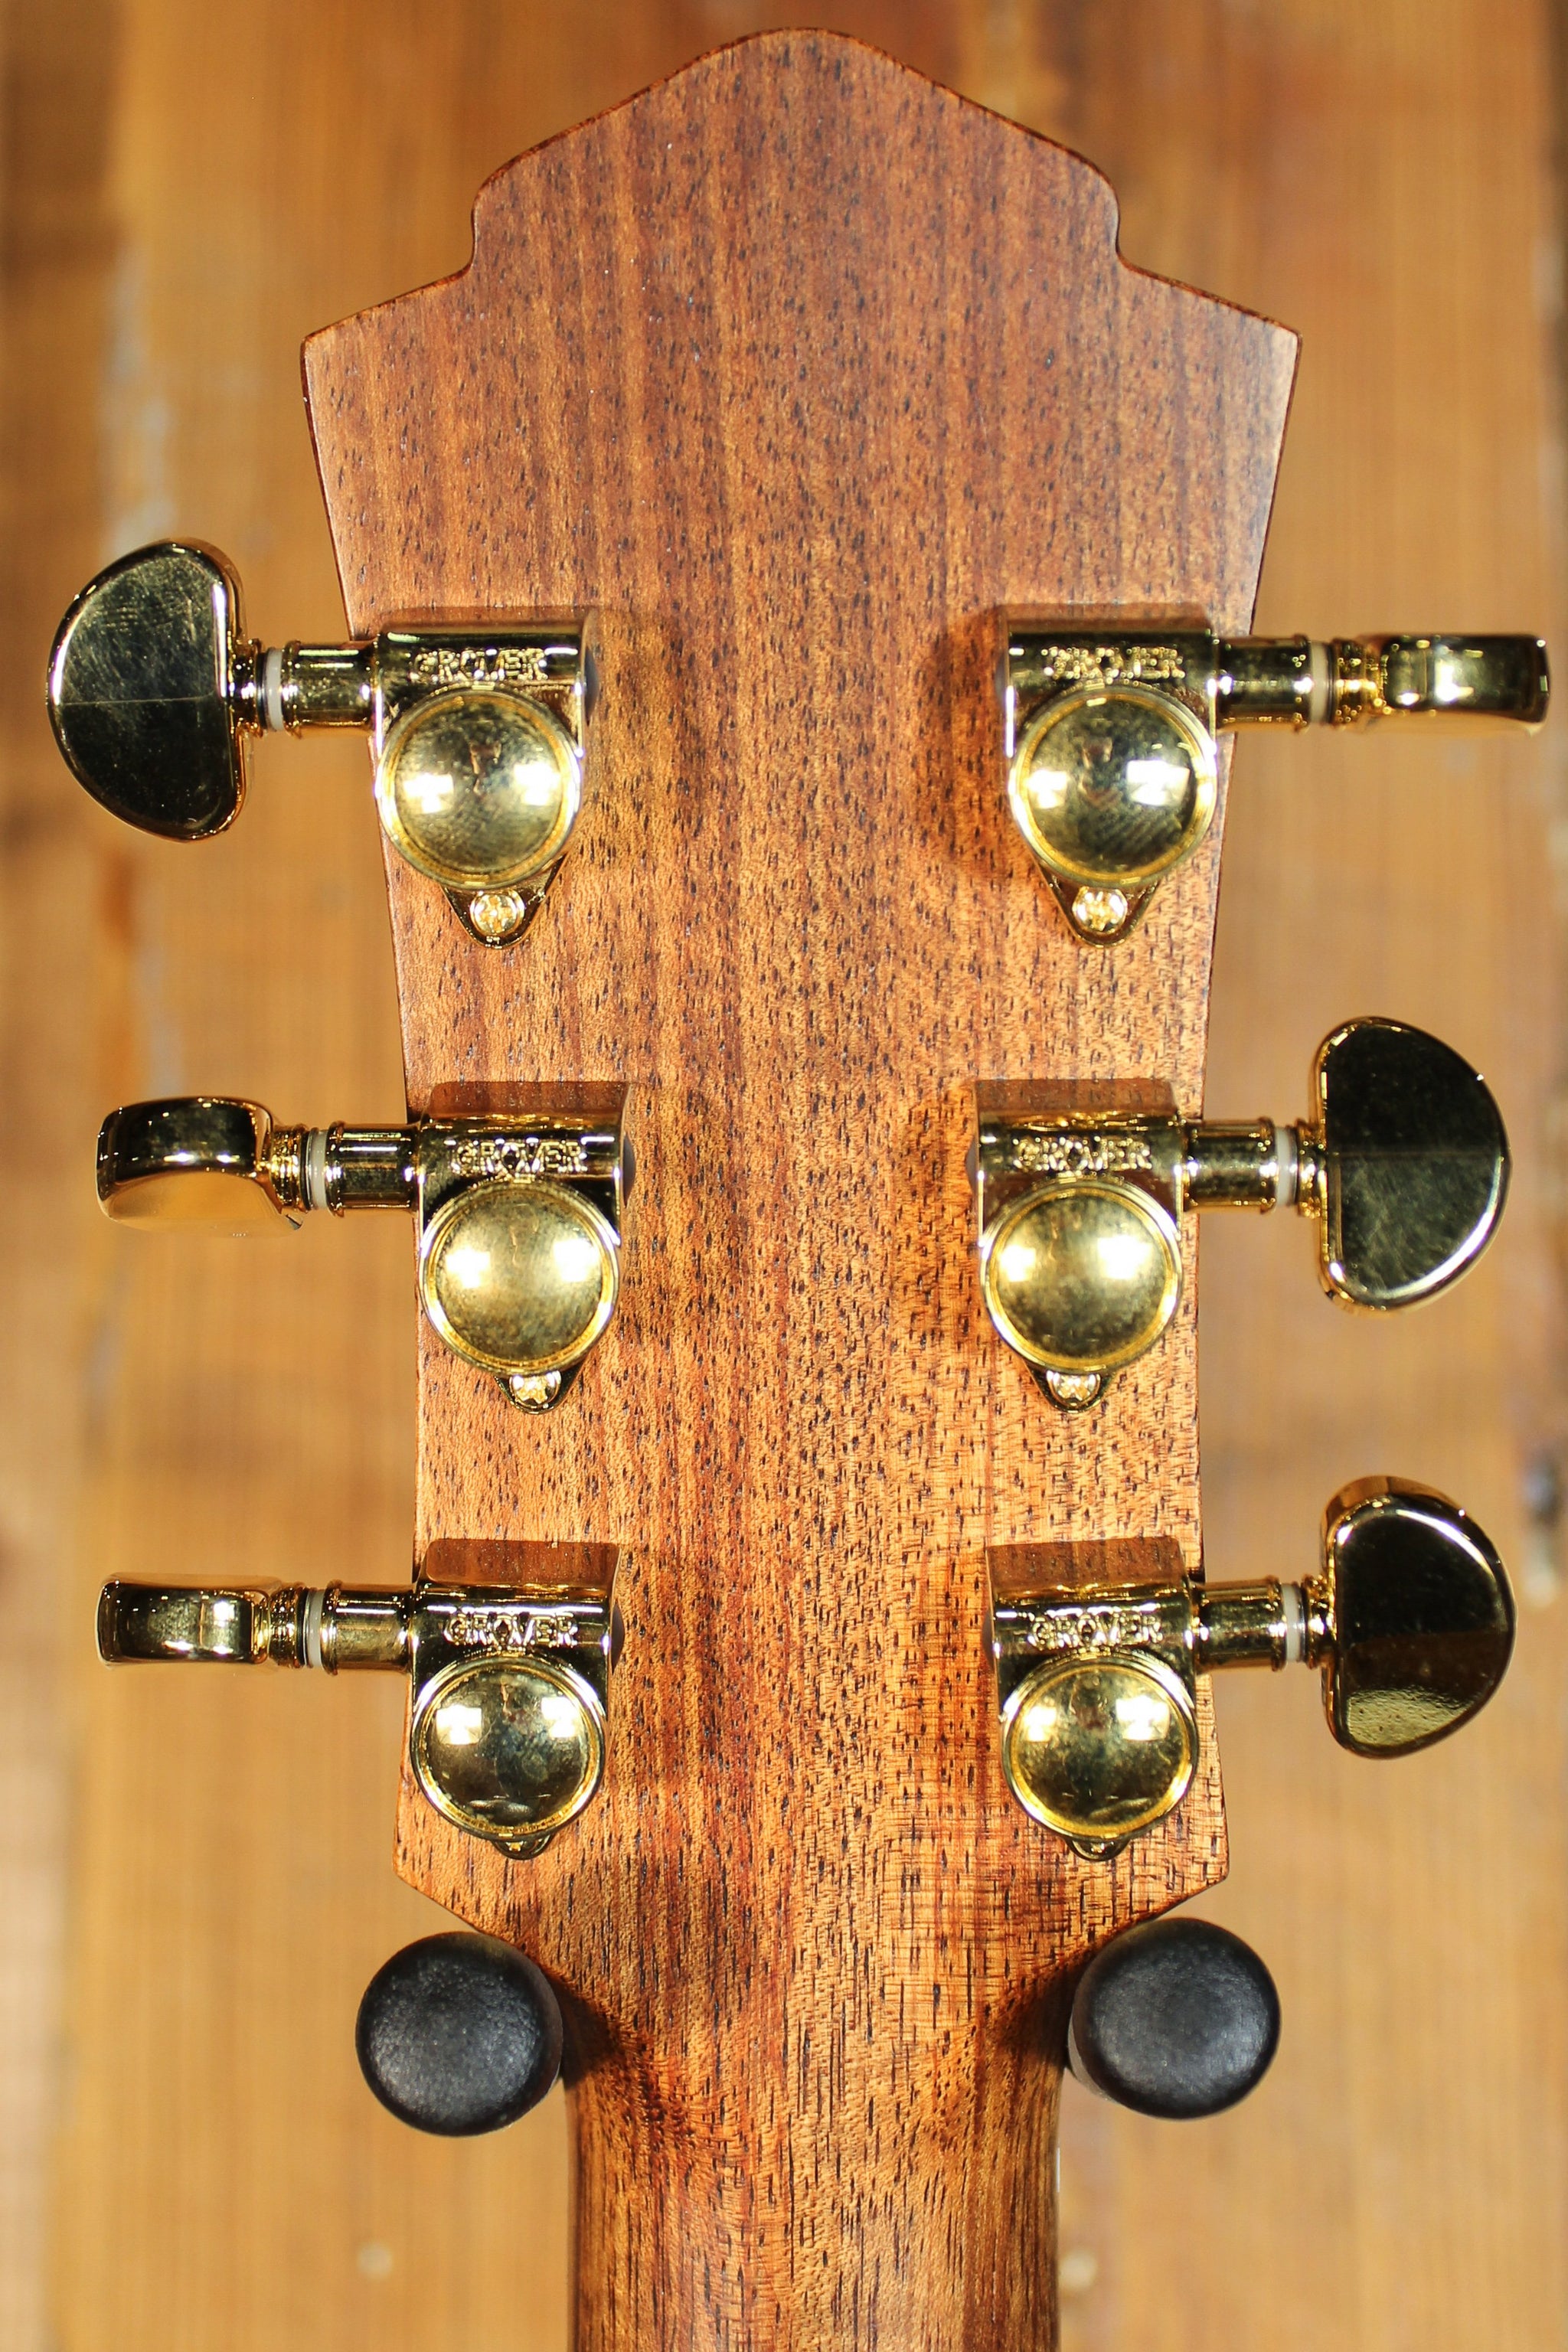 Maton Vera May Special w/ Lutz Spruce & Blackwood ID-13774 - Artisan Guitars